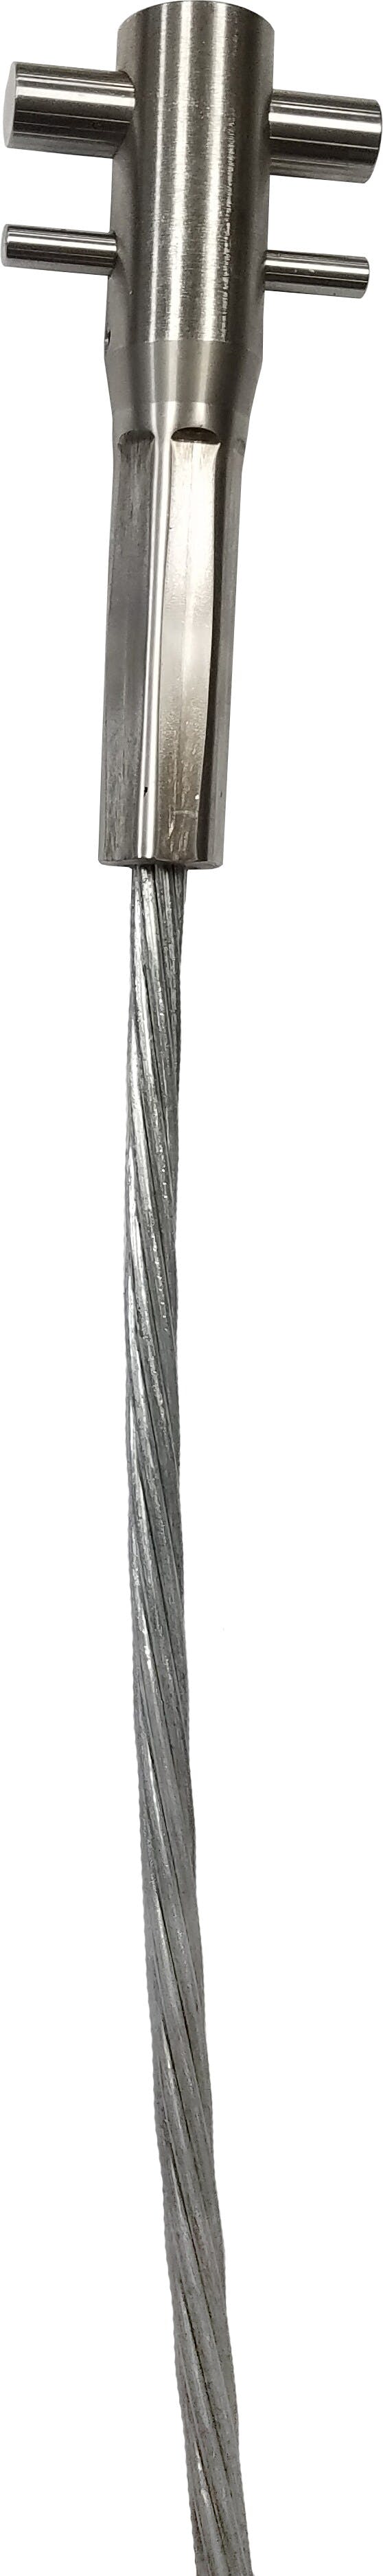 3M™ DBI-SALA® Lad-Saf™ Swaged Cable 6115027, 3/8 Inch, Galvanized Steel, 110 m_0